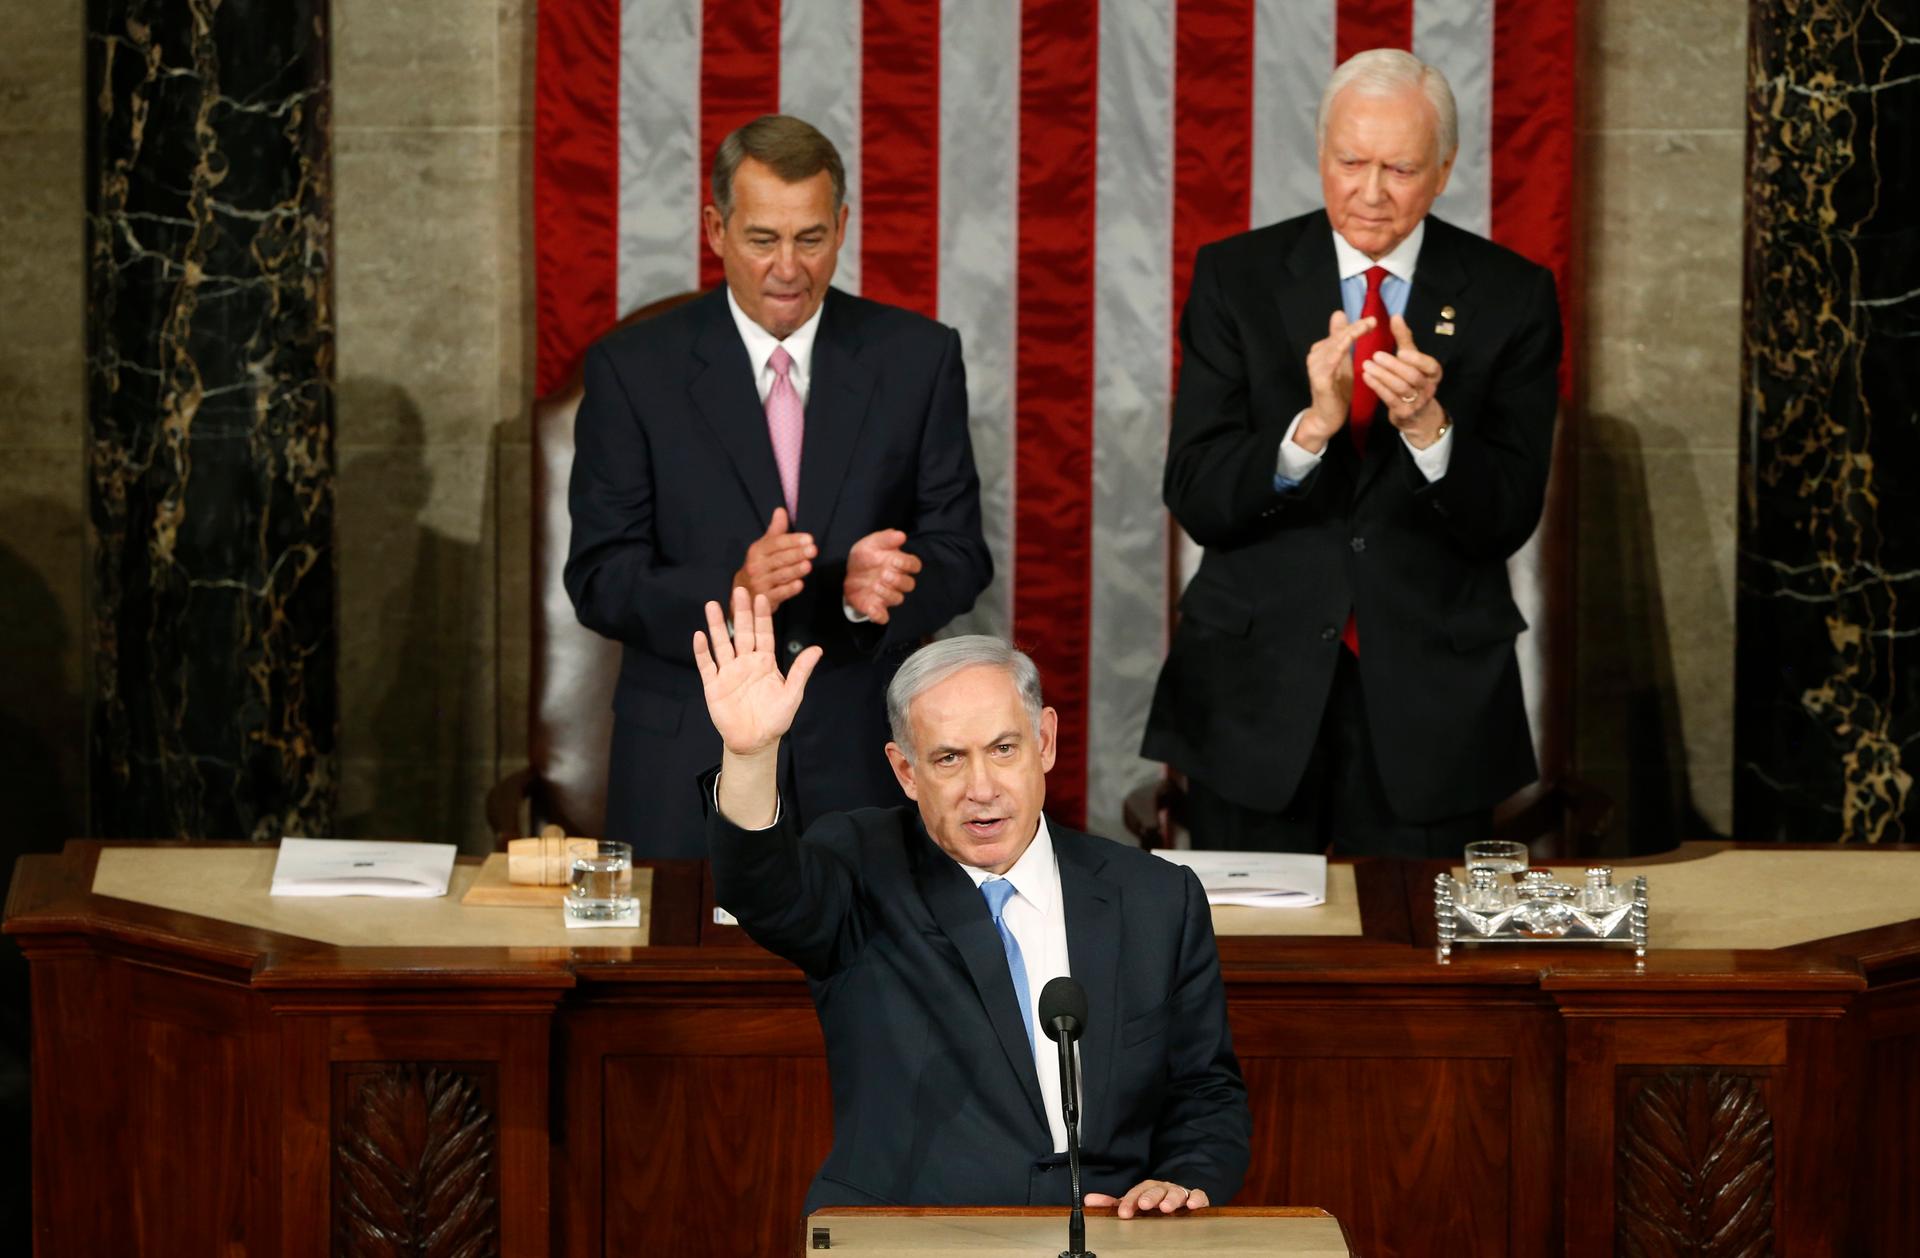 Israeli Prime Minister Benjamin Netanyahu speaks to a joint meeting of Congress on March 3, 2015. Speaker of the House John Boehner (R-Ohio) and President pro tempore of the Senate Orrin Hatch (R-Utah) applaud behind Netanyahu.